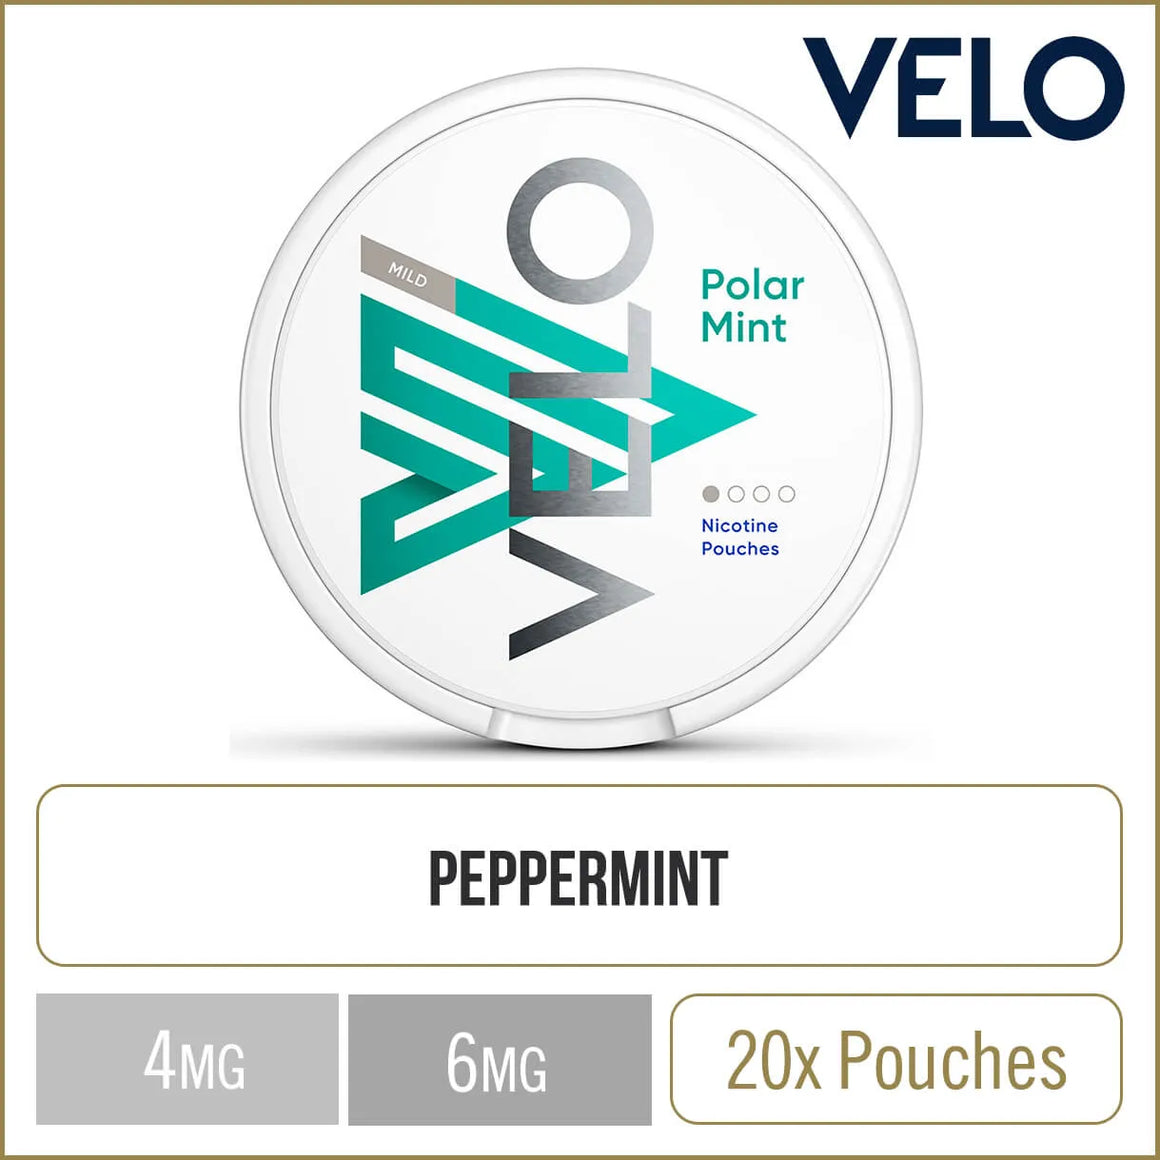 VELO Polar Mint Nicotine Pouches 20 Pack